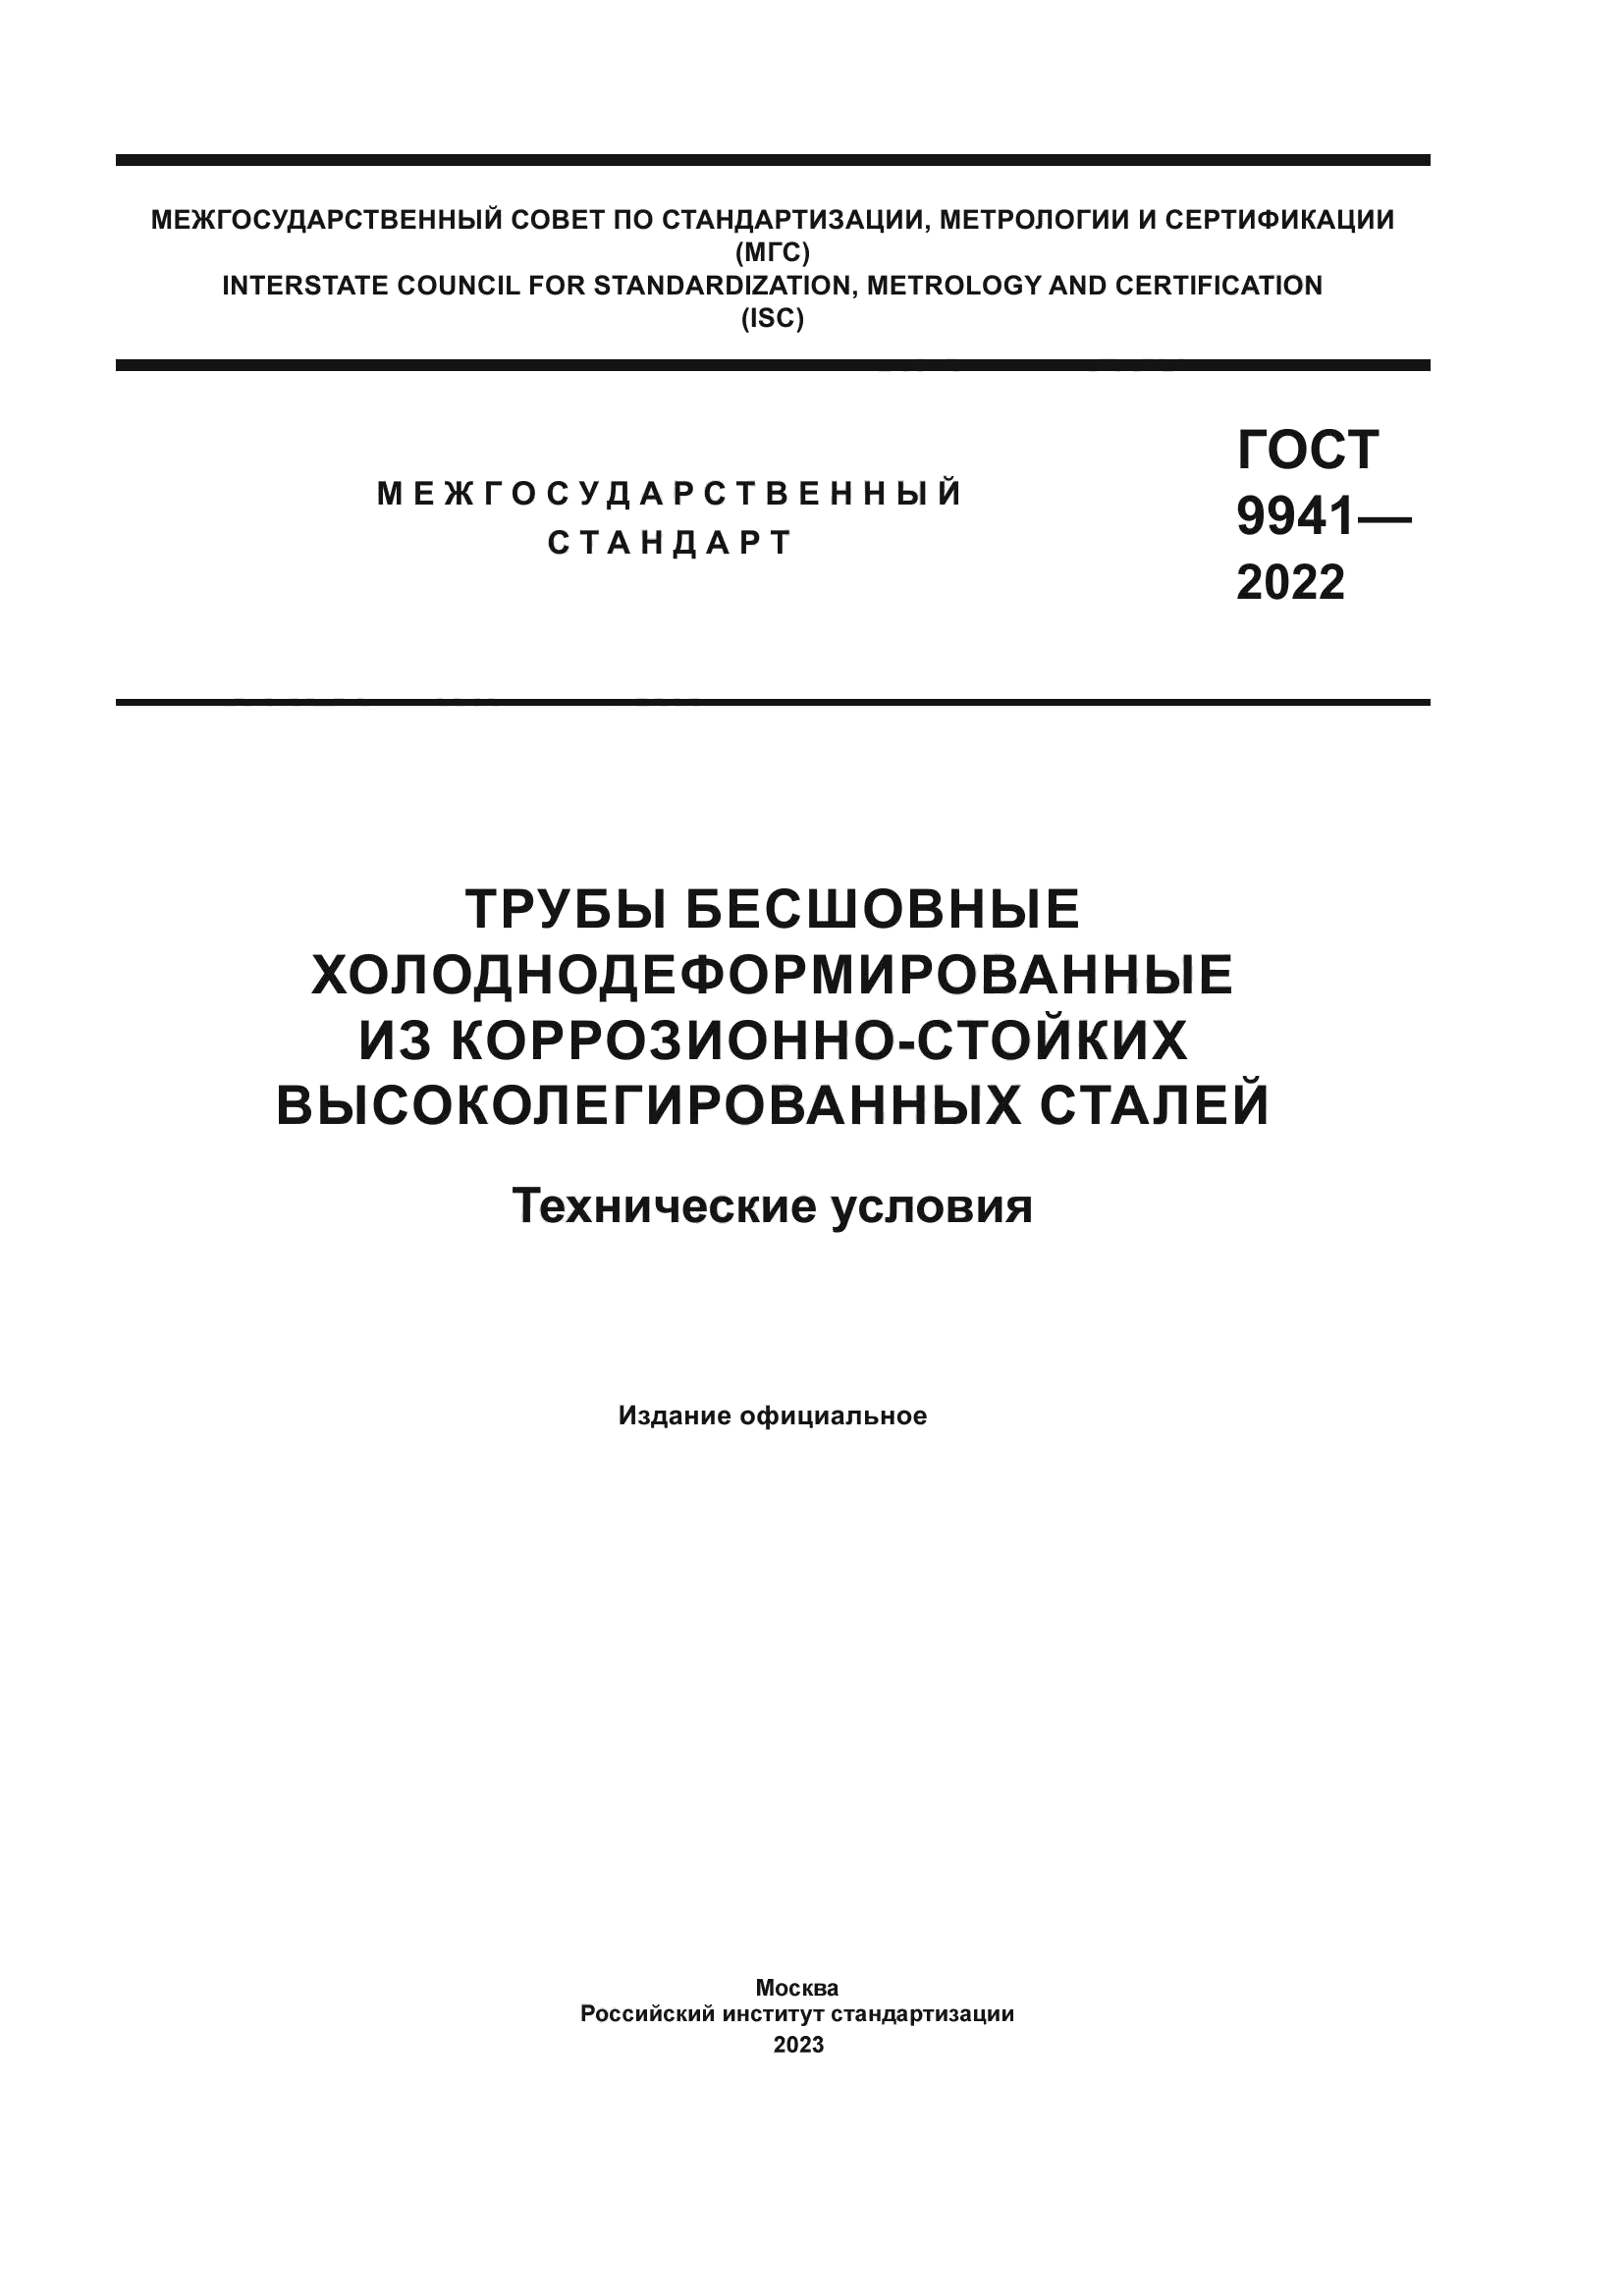 ГОСТ 9941-2022